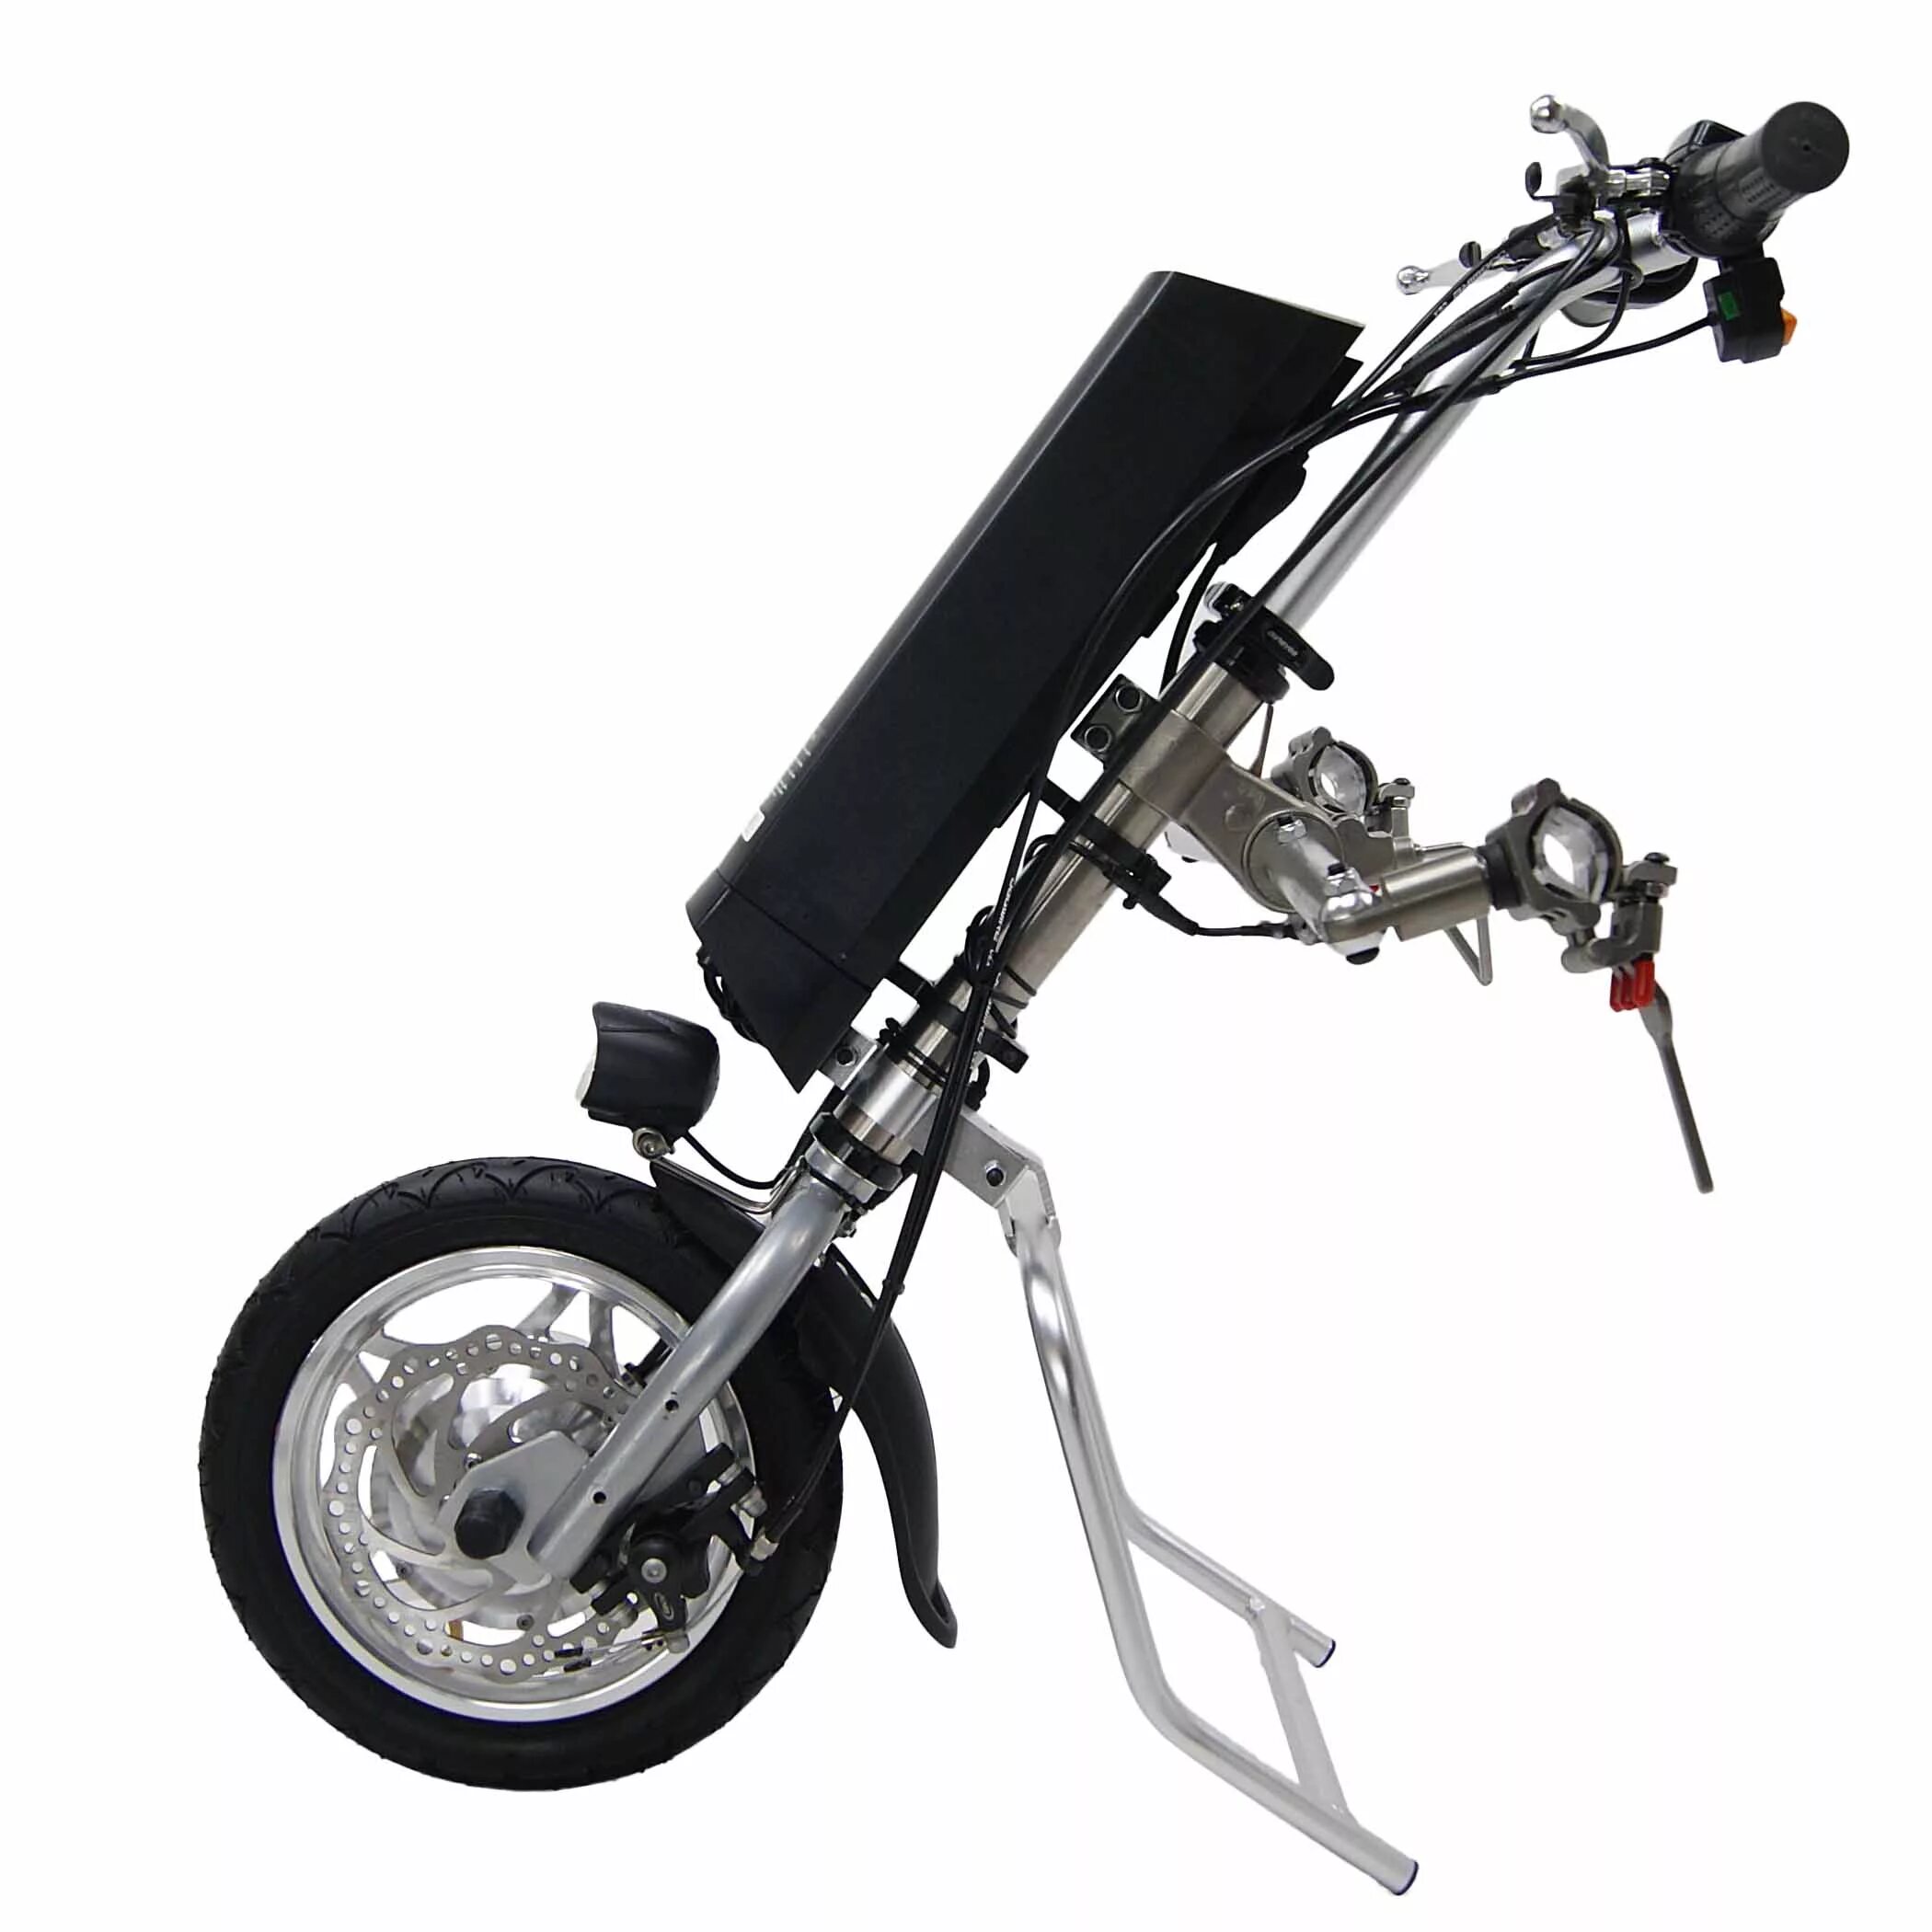 Электро приставки. Электроприставка для инвалидной коляски. Электро приставка для инвалидной коляски Eltreco Sunny. Электровелосипед 250w 36в. Мотор для инвалидной коляски 250 Вт.